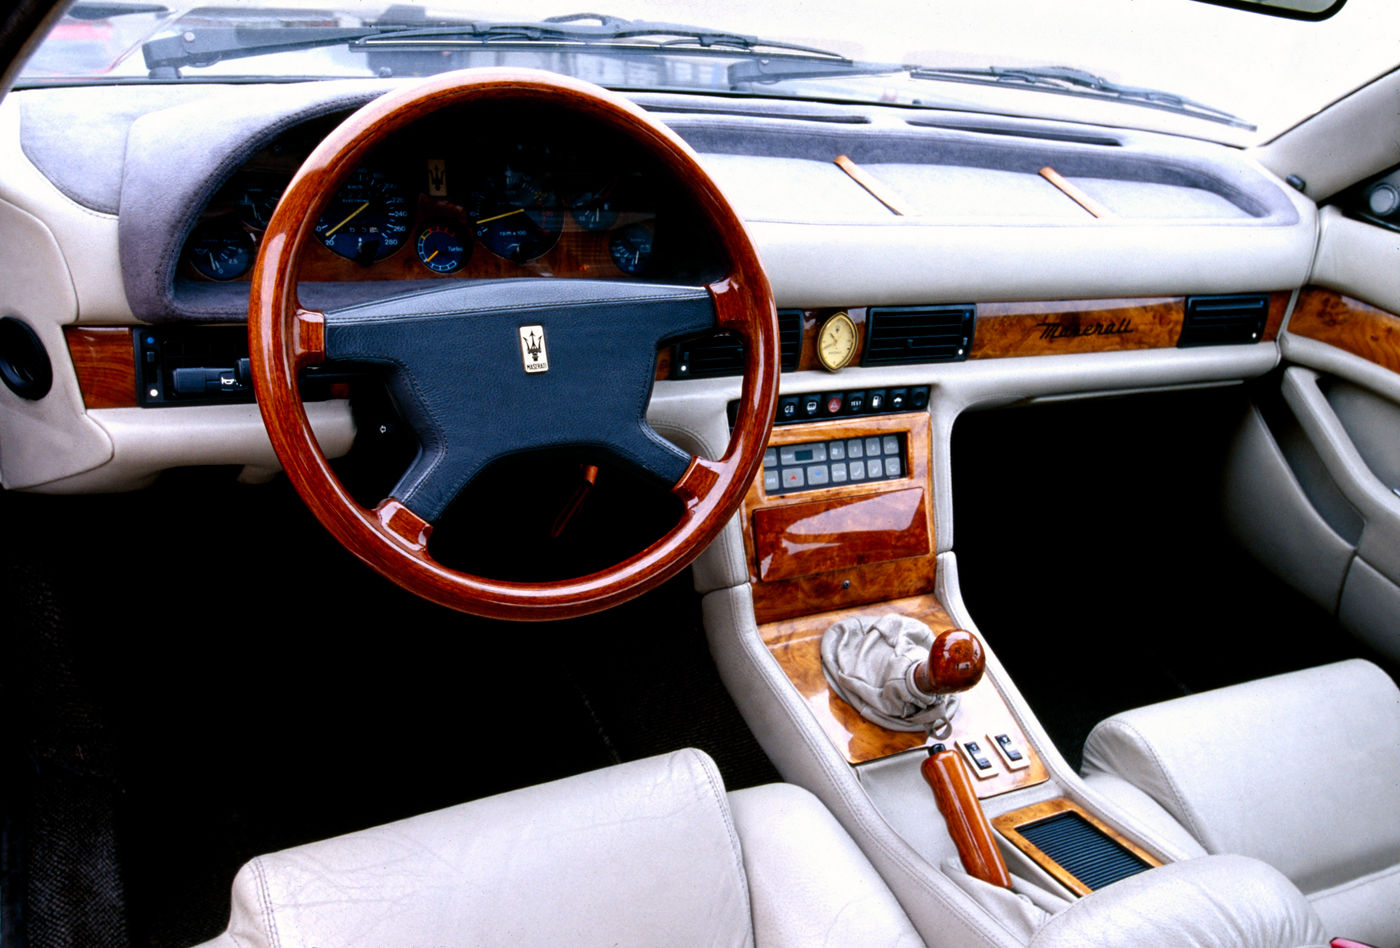 1989 Maserati Karif - Biturbo - interior of the classic car model